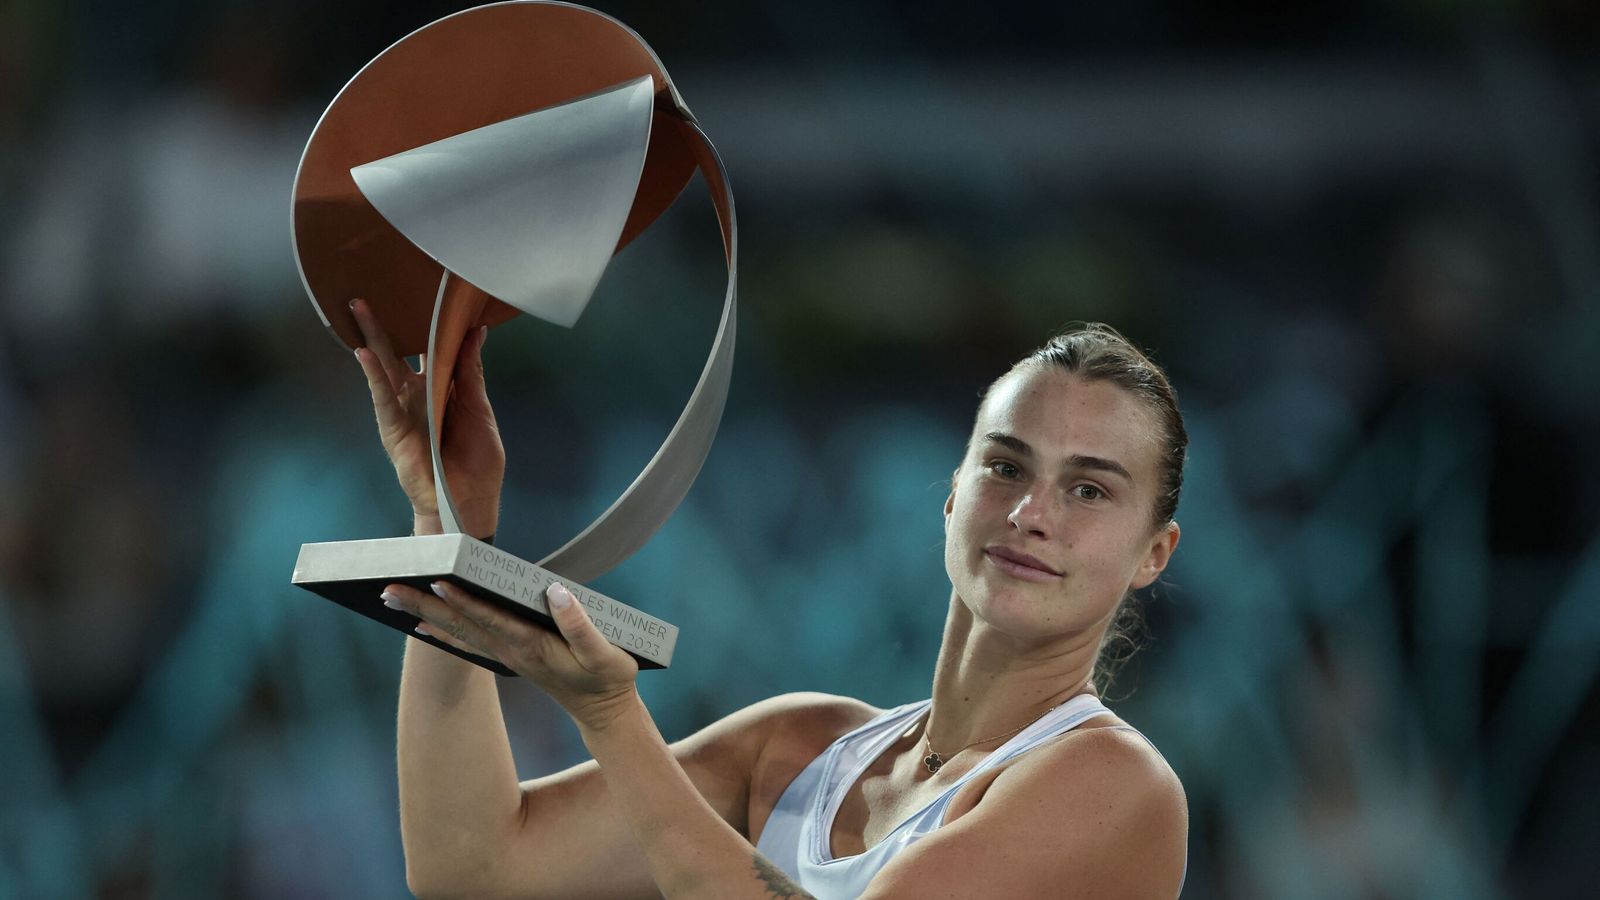 Open di Madrid: Aryna Sabalenka batte Iga Swiatek in tre set e conquista la gloria nella capitale spagnola |  Notizie sul tennis